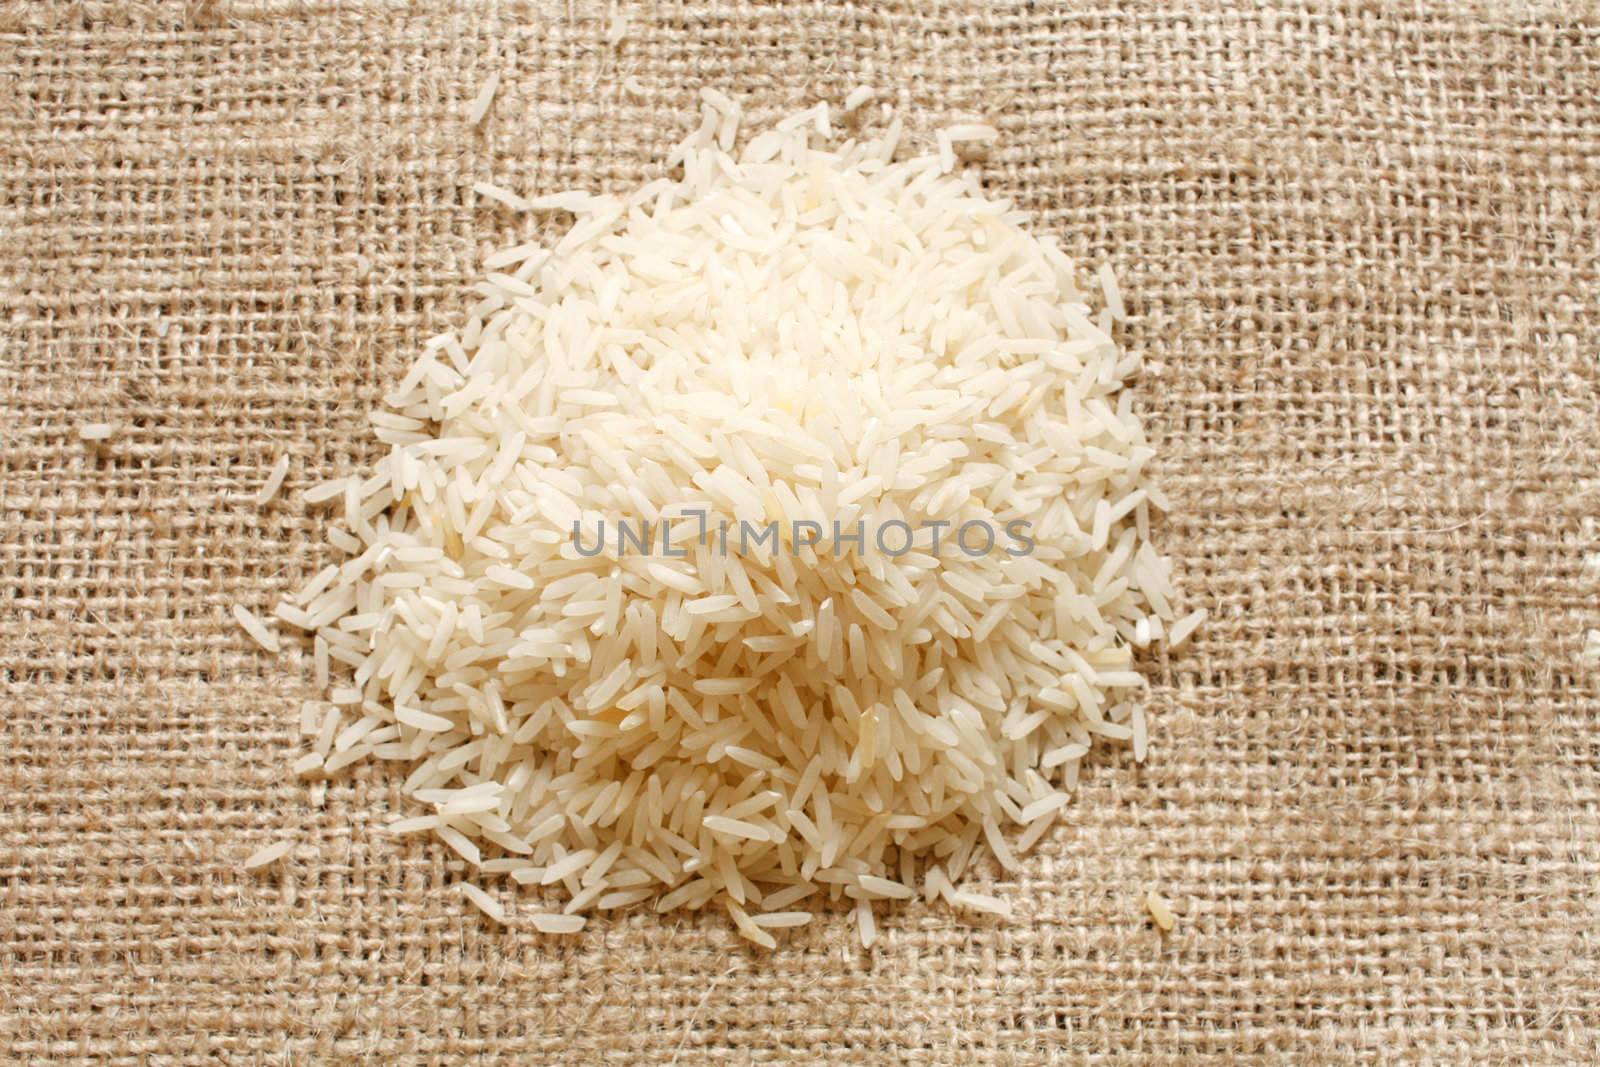 Basmati rice in a heap